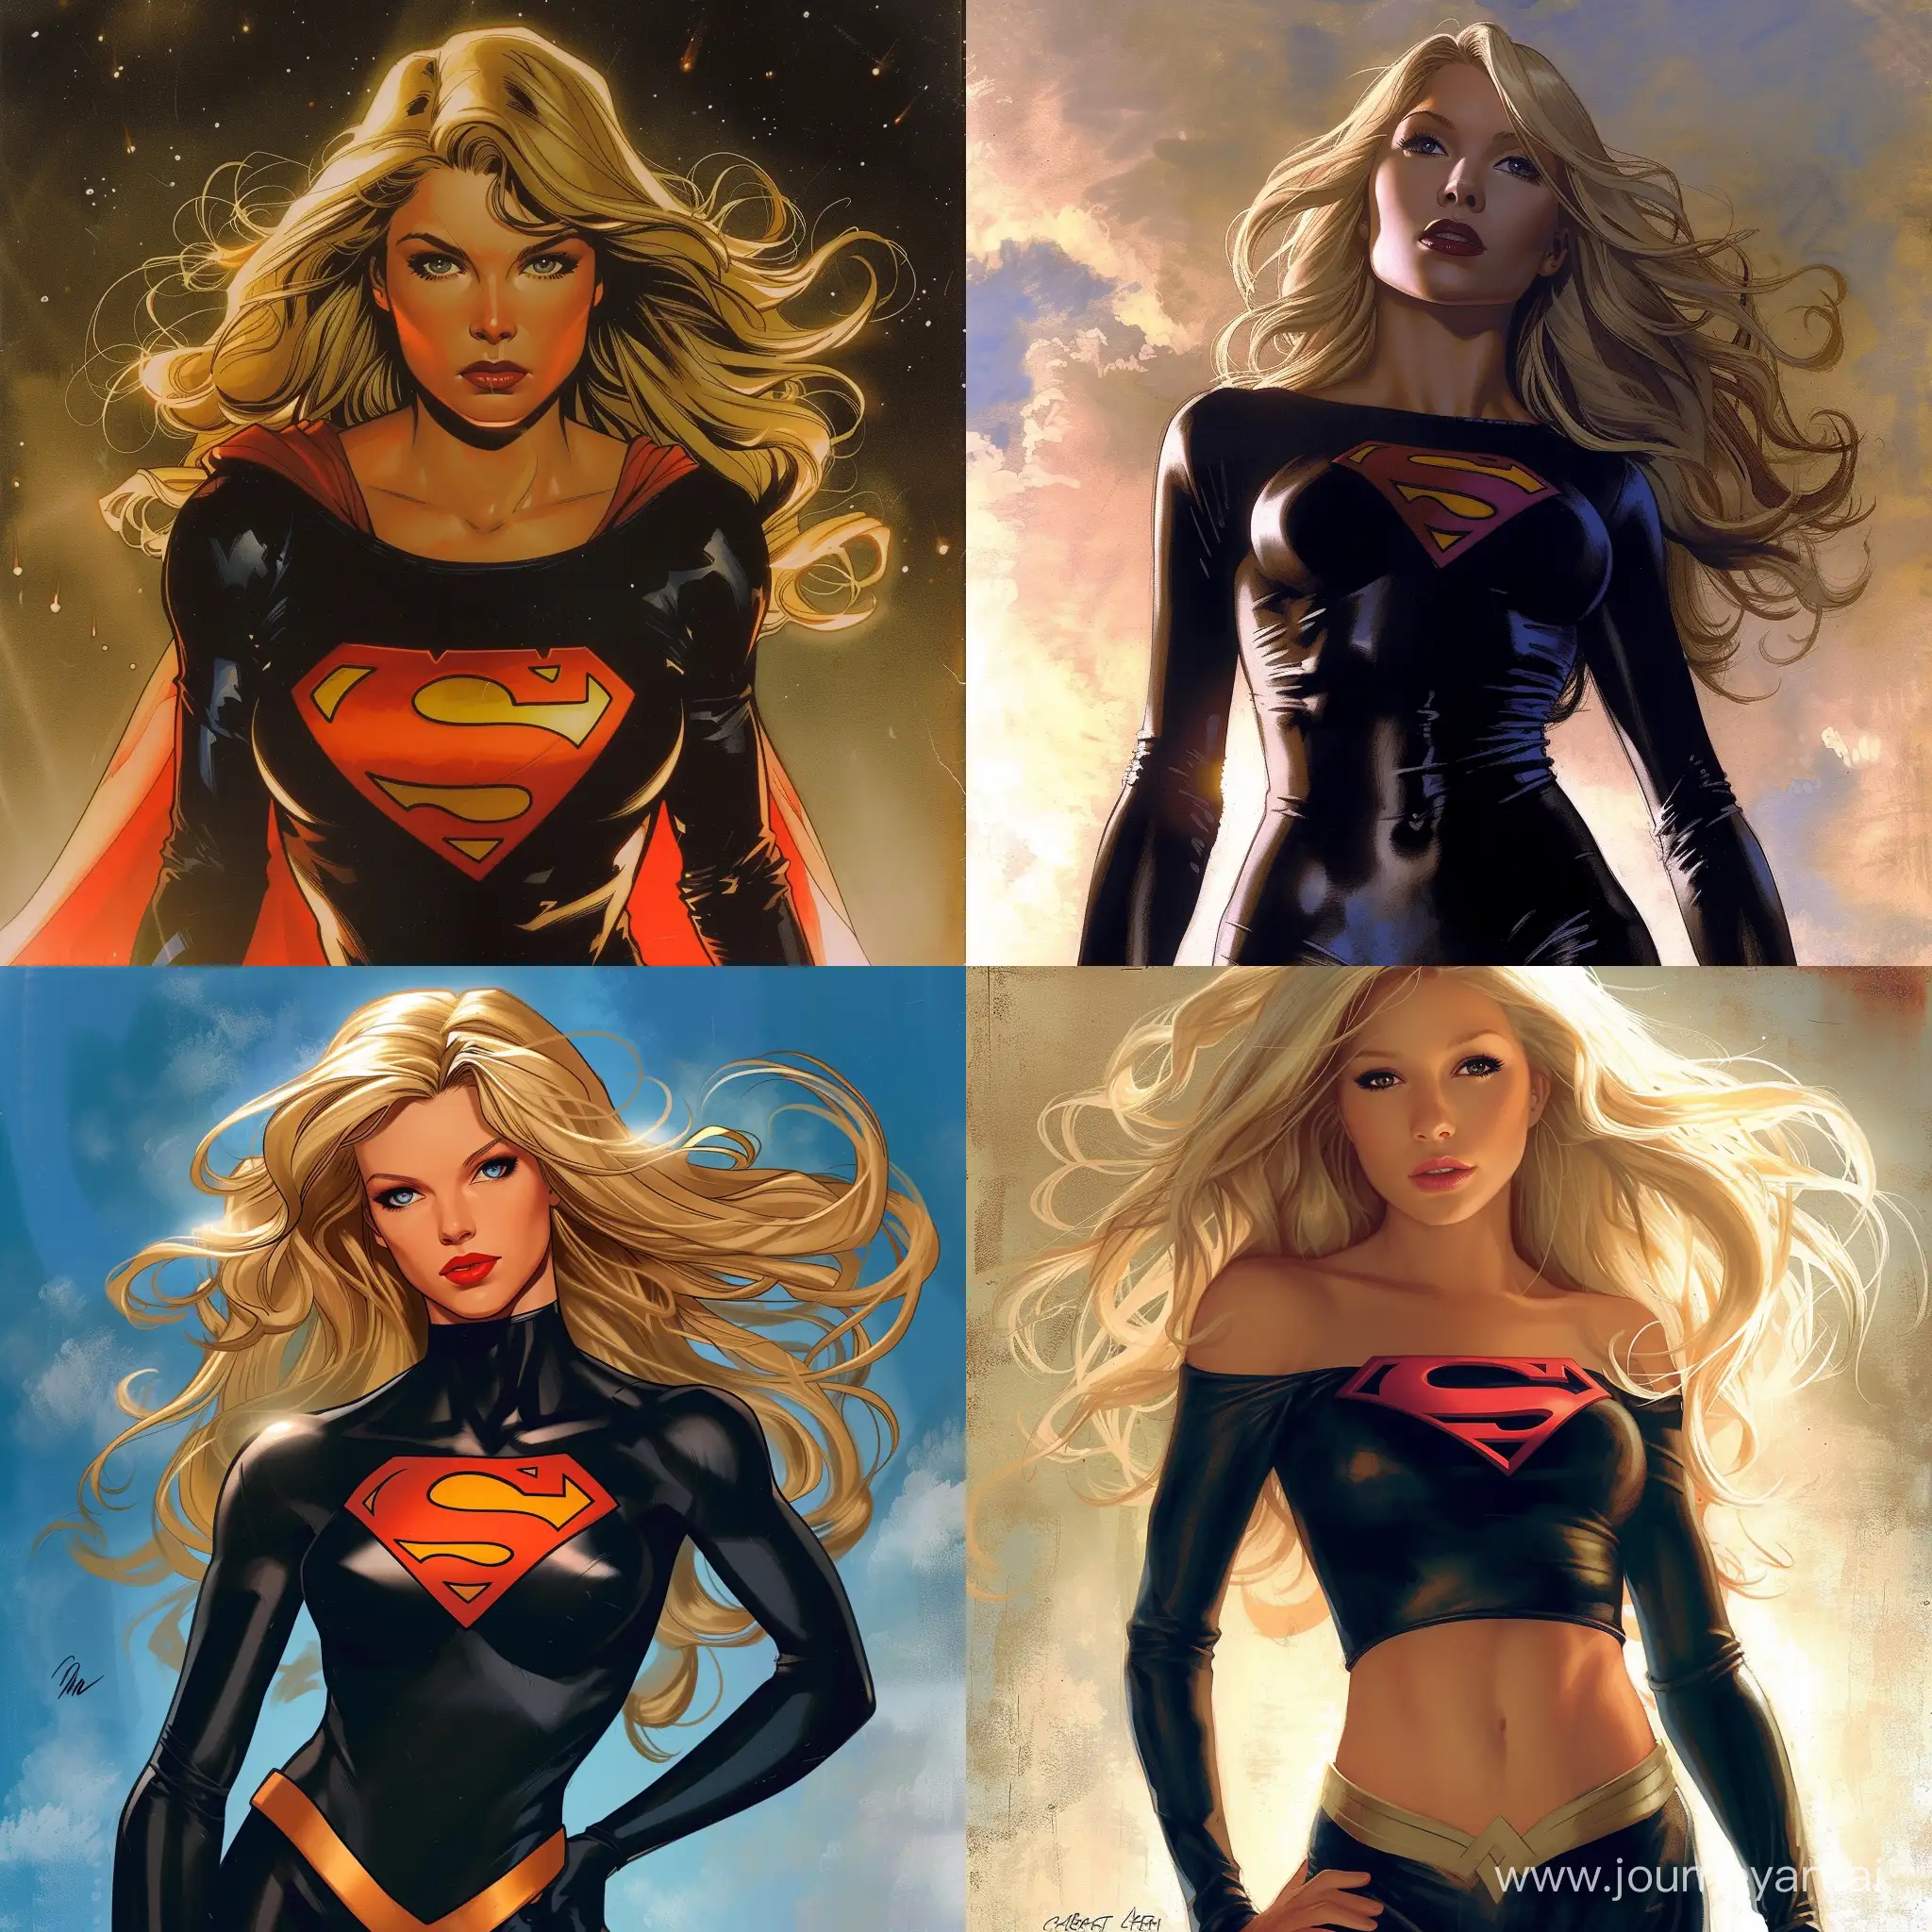 Supergirl-in-Dark-Suit-by-Bruce-Timm-Powerful-Female-Superhero-Portrait